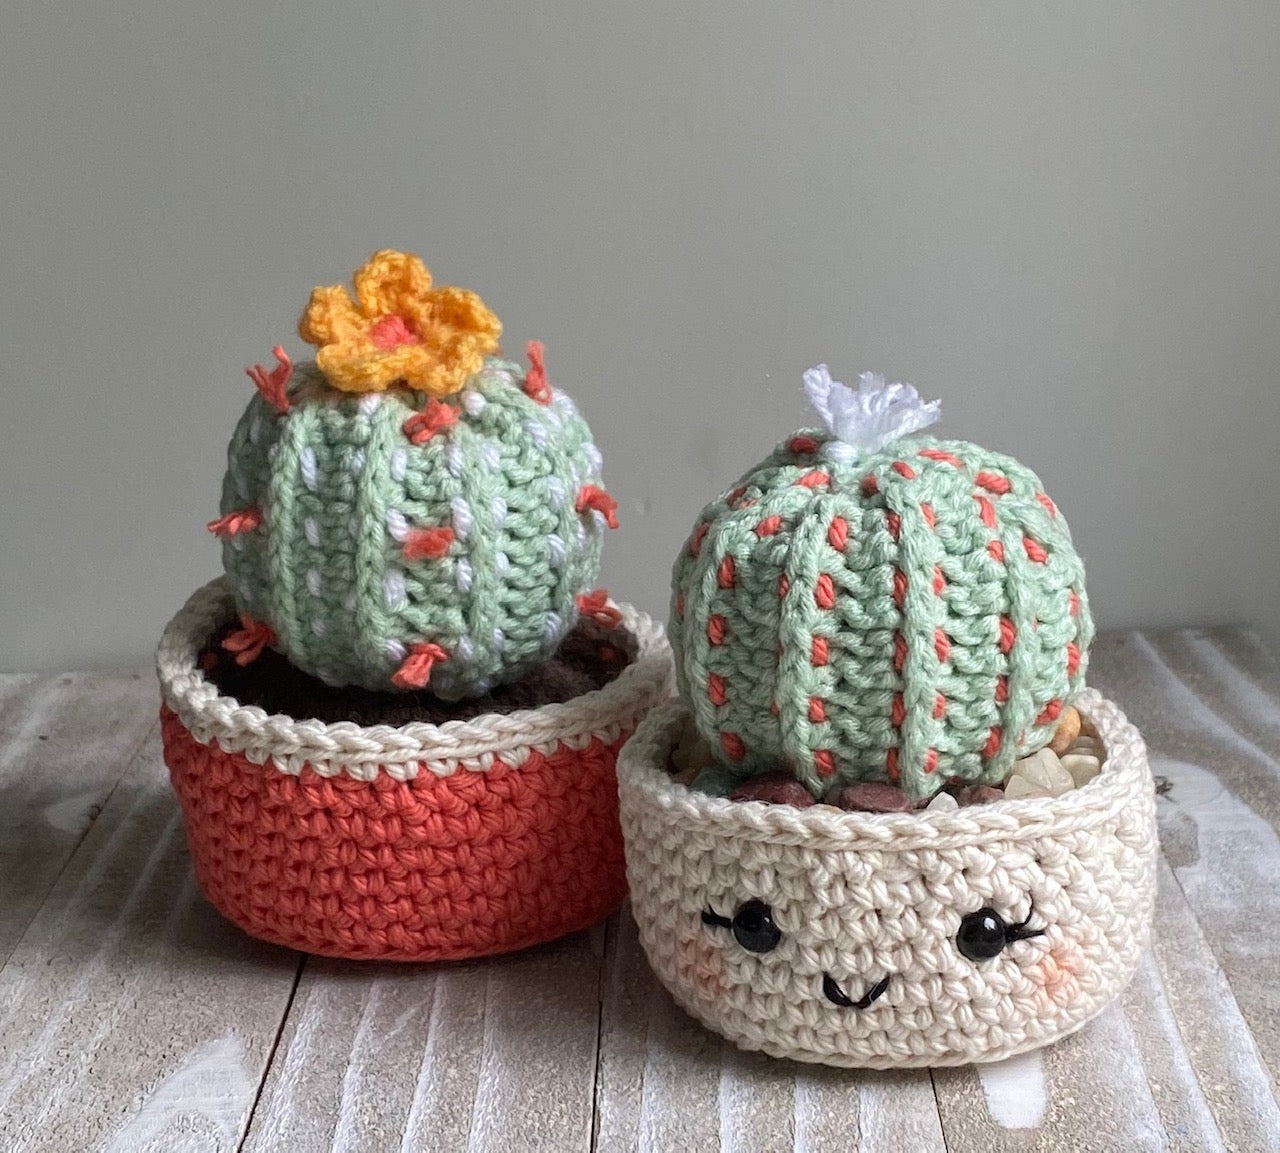 Barrel Cactus Crochet Pattern